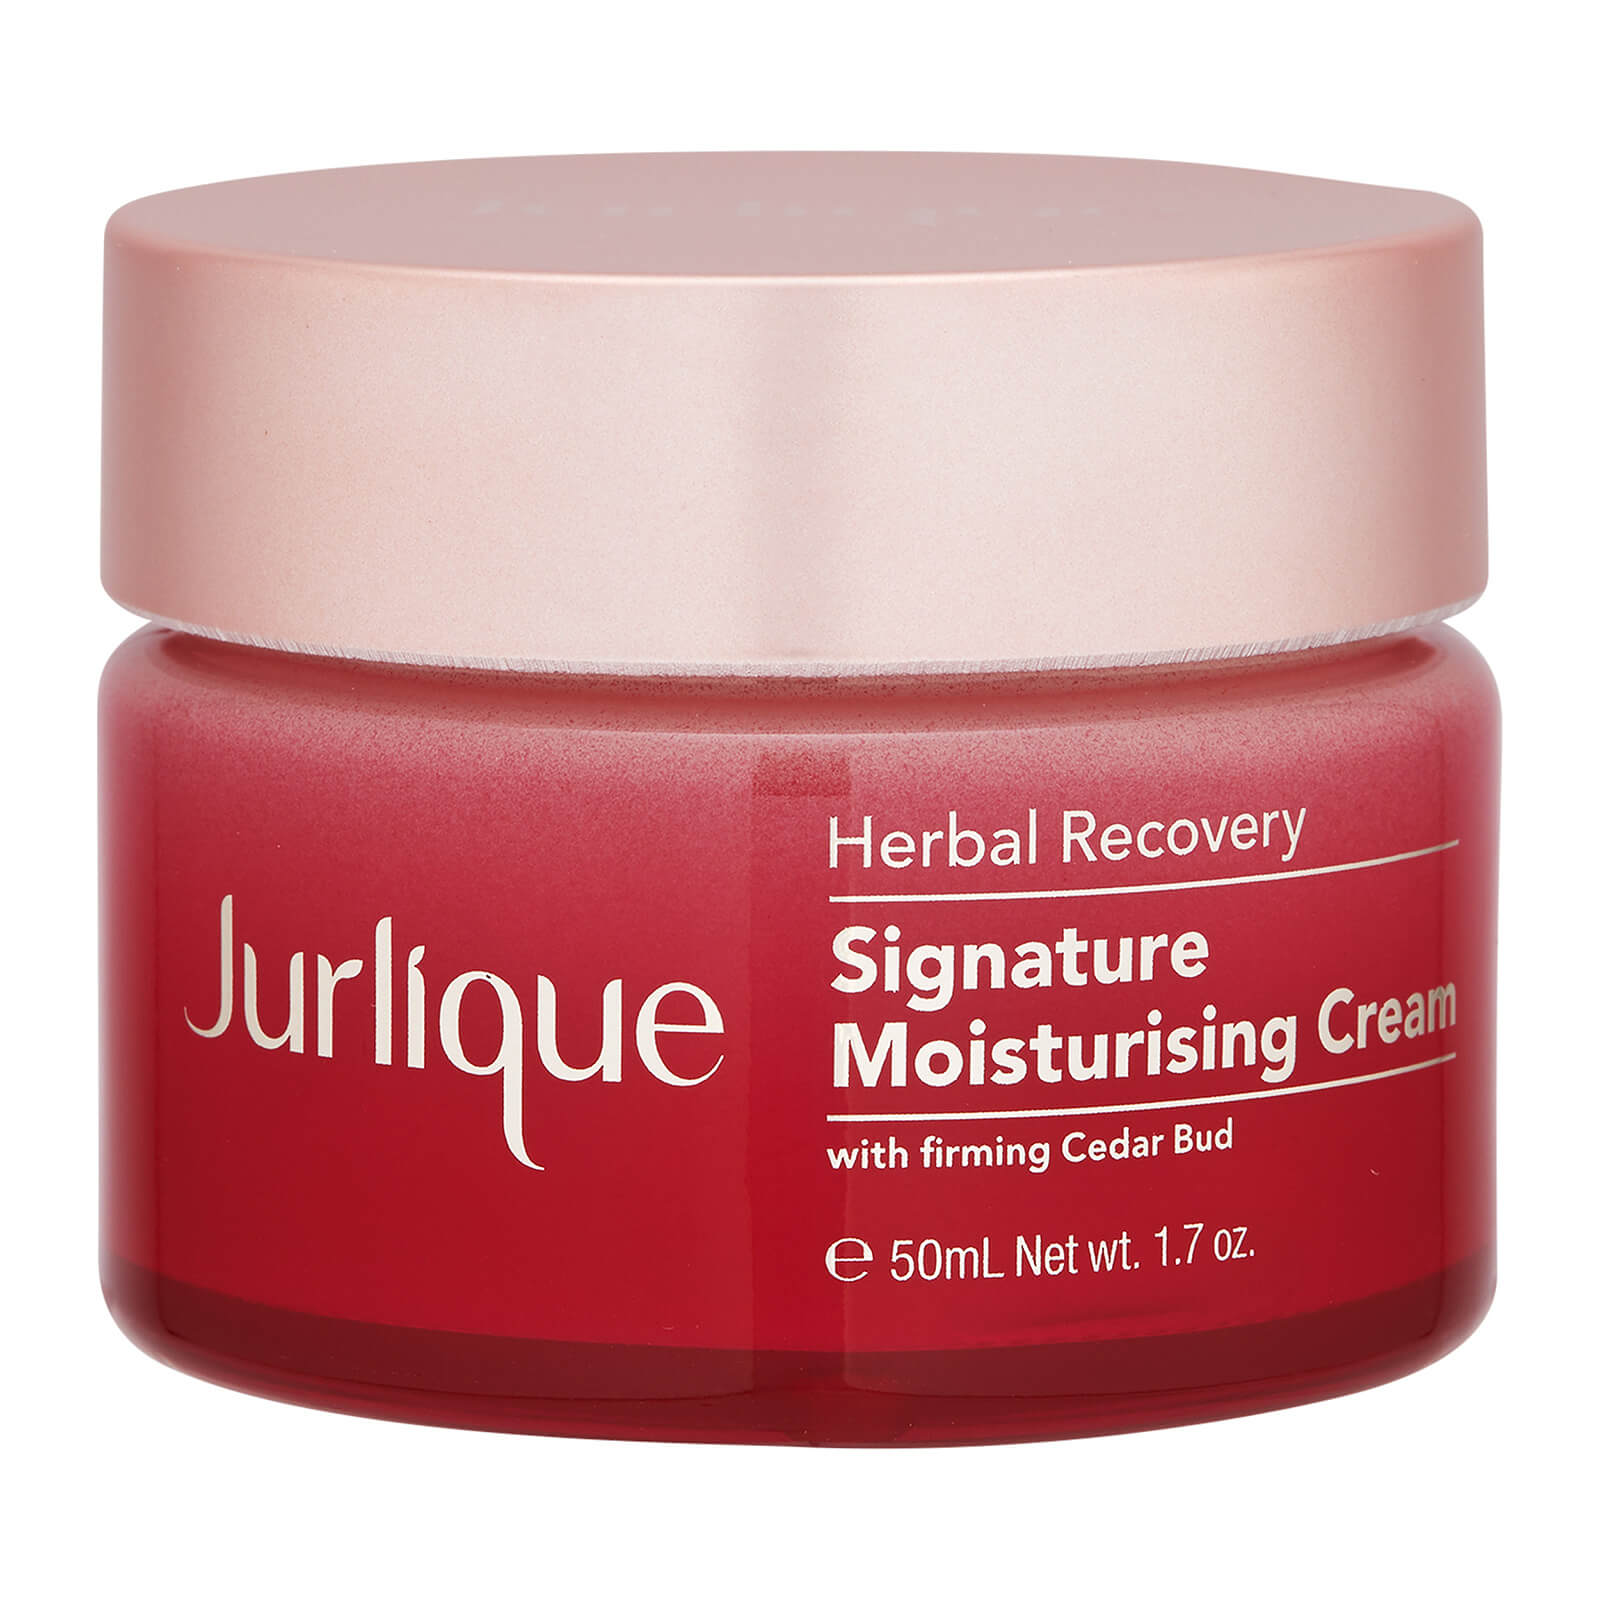 Herbal Recovery Signature Moisturising Cream